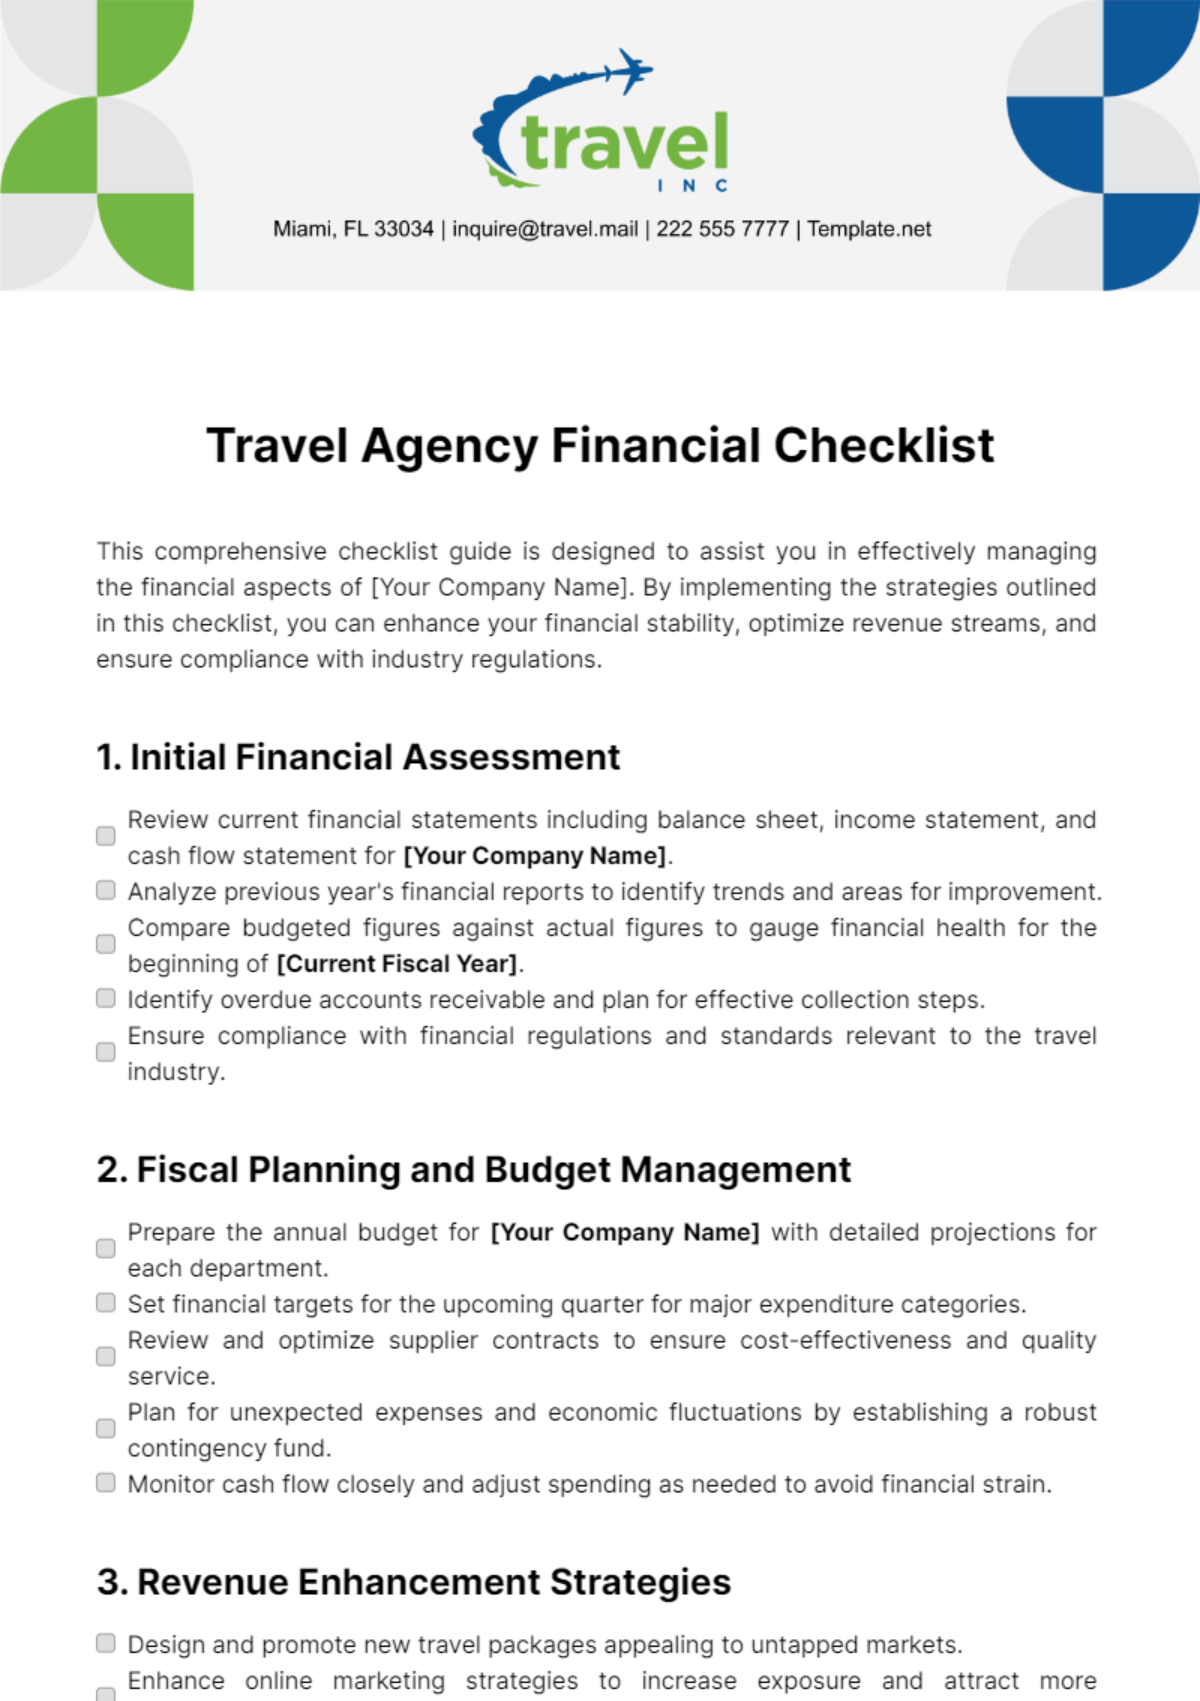 Travel Agency Financial Checklist Template